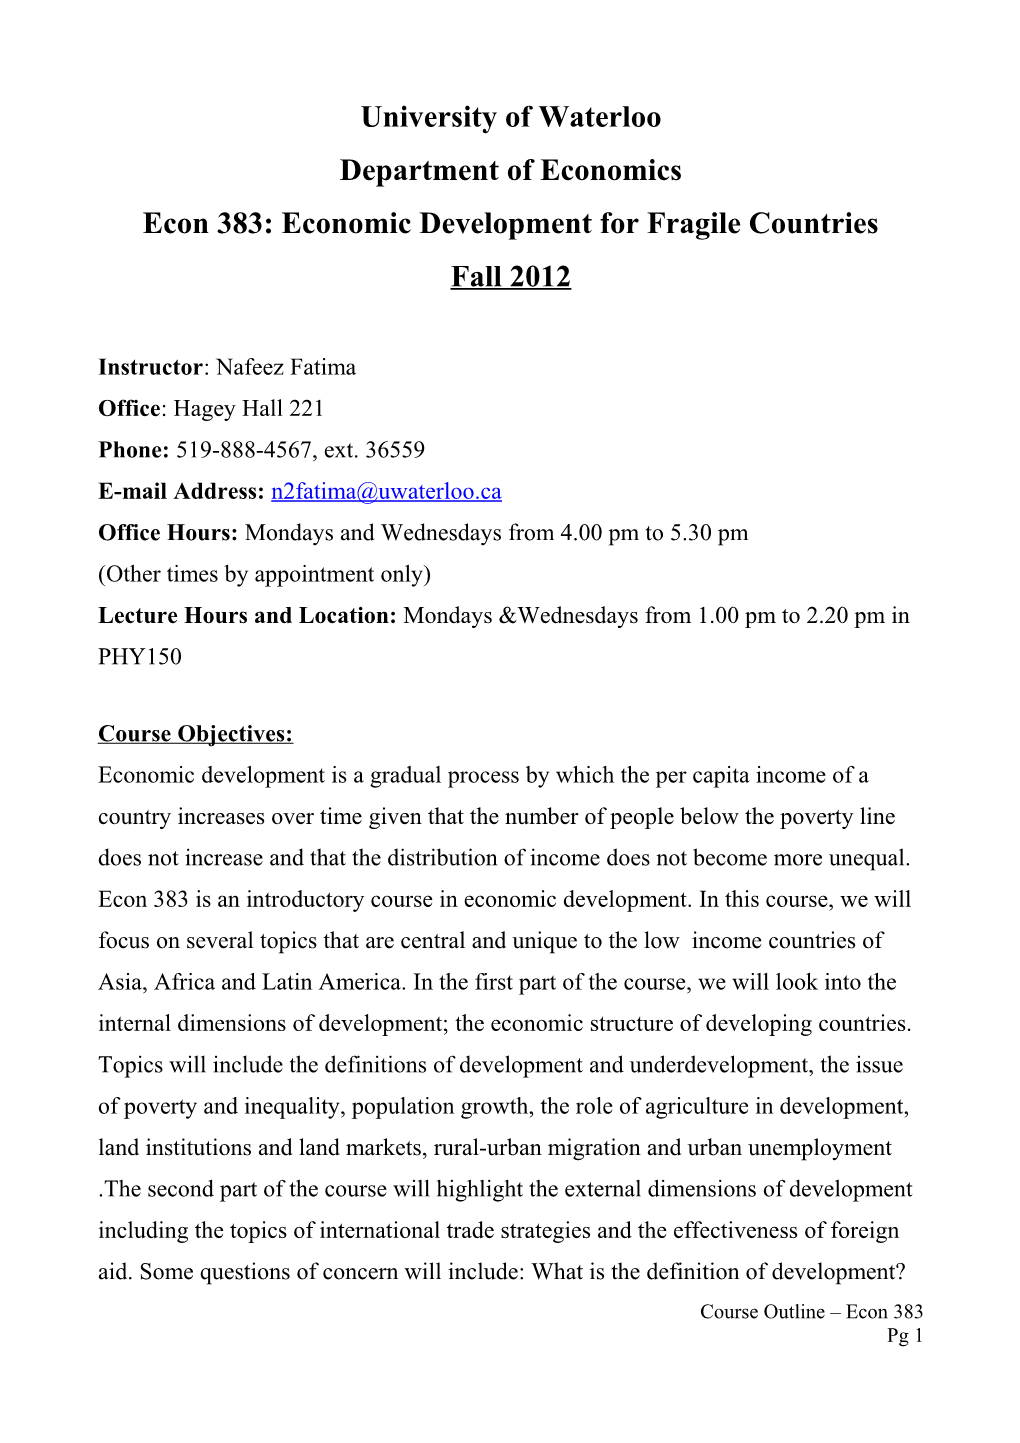 Econ 383: Economic Development for Fragile Countries